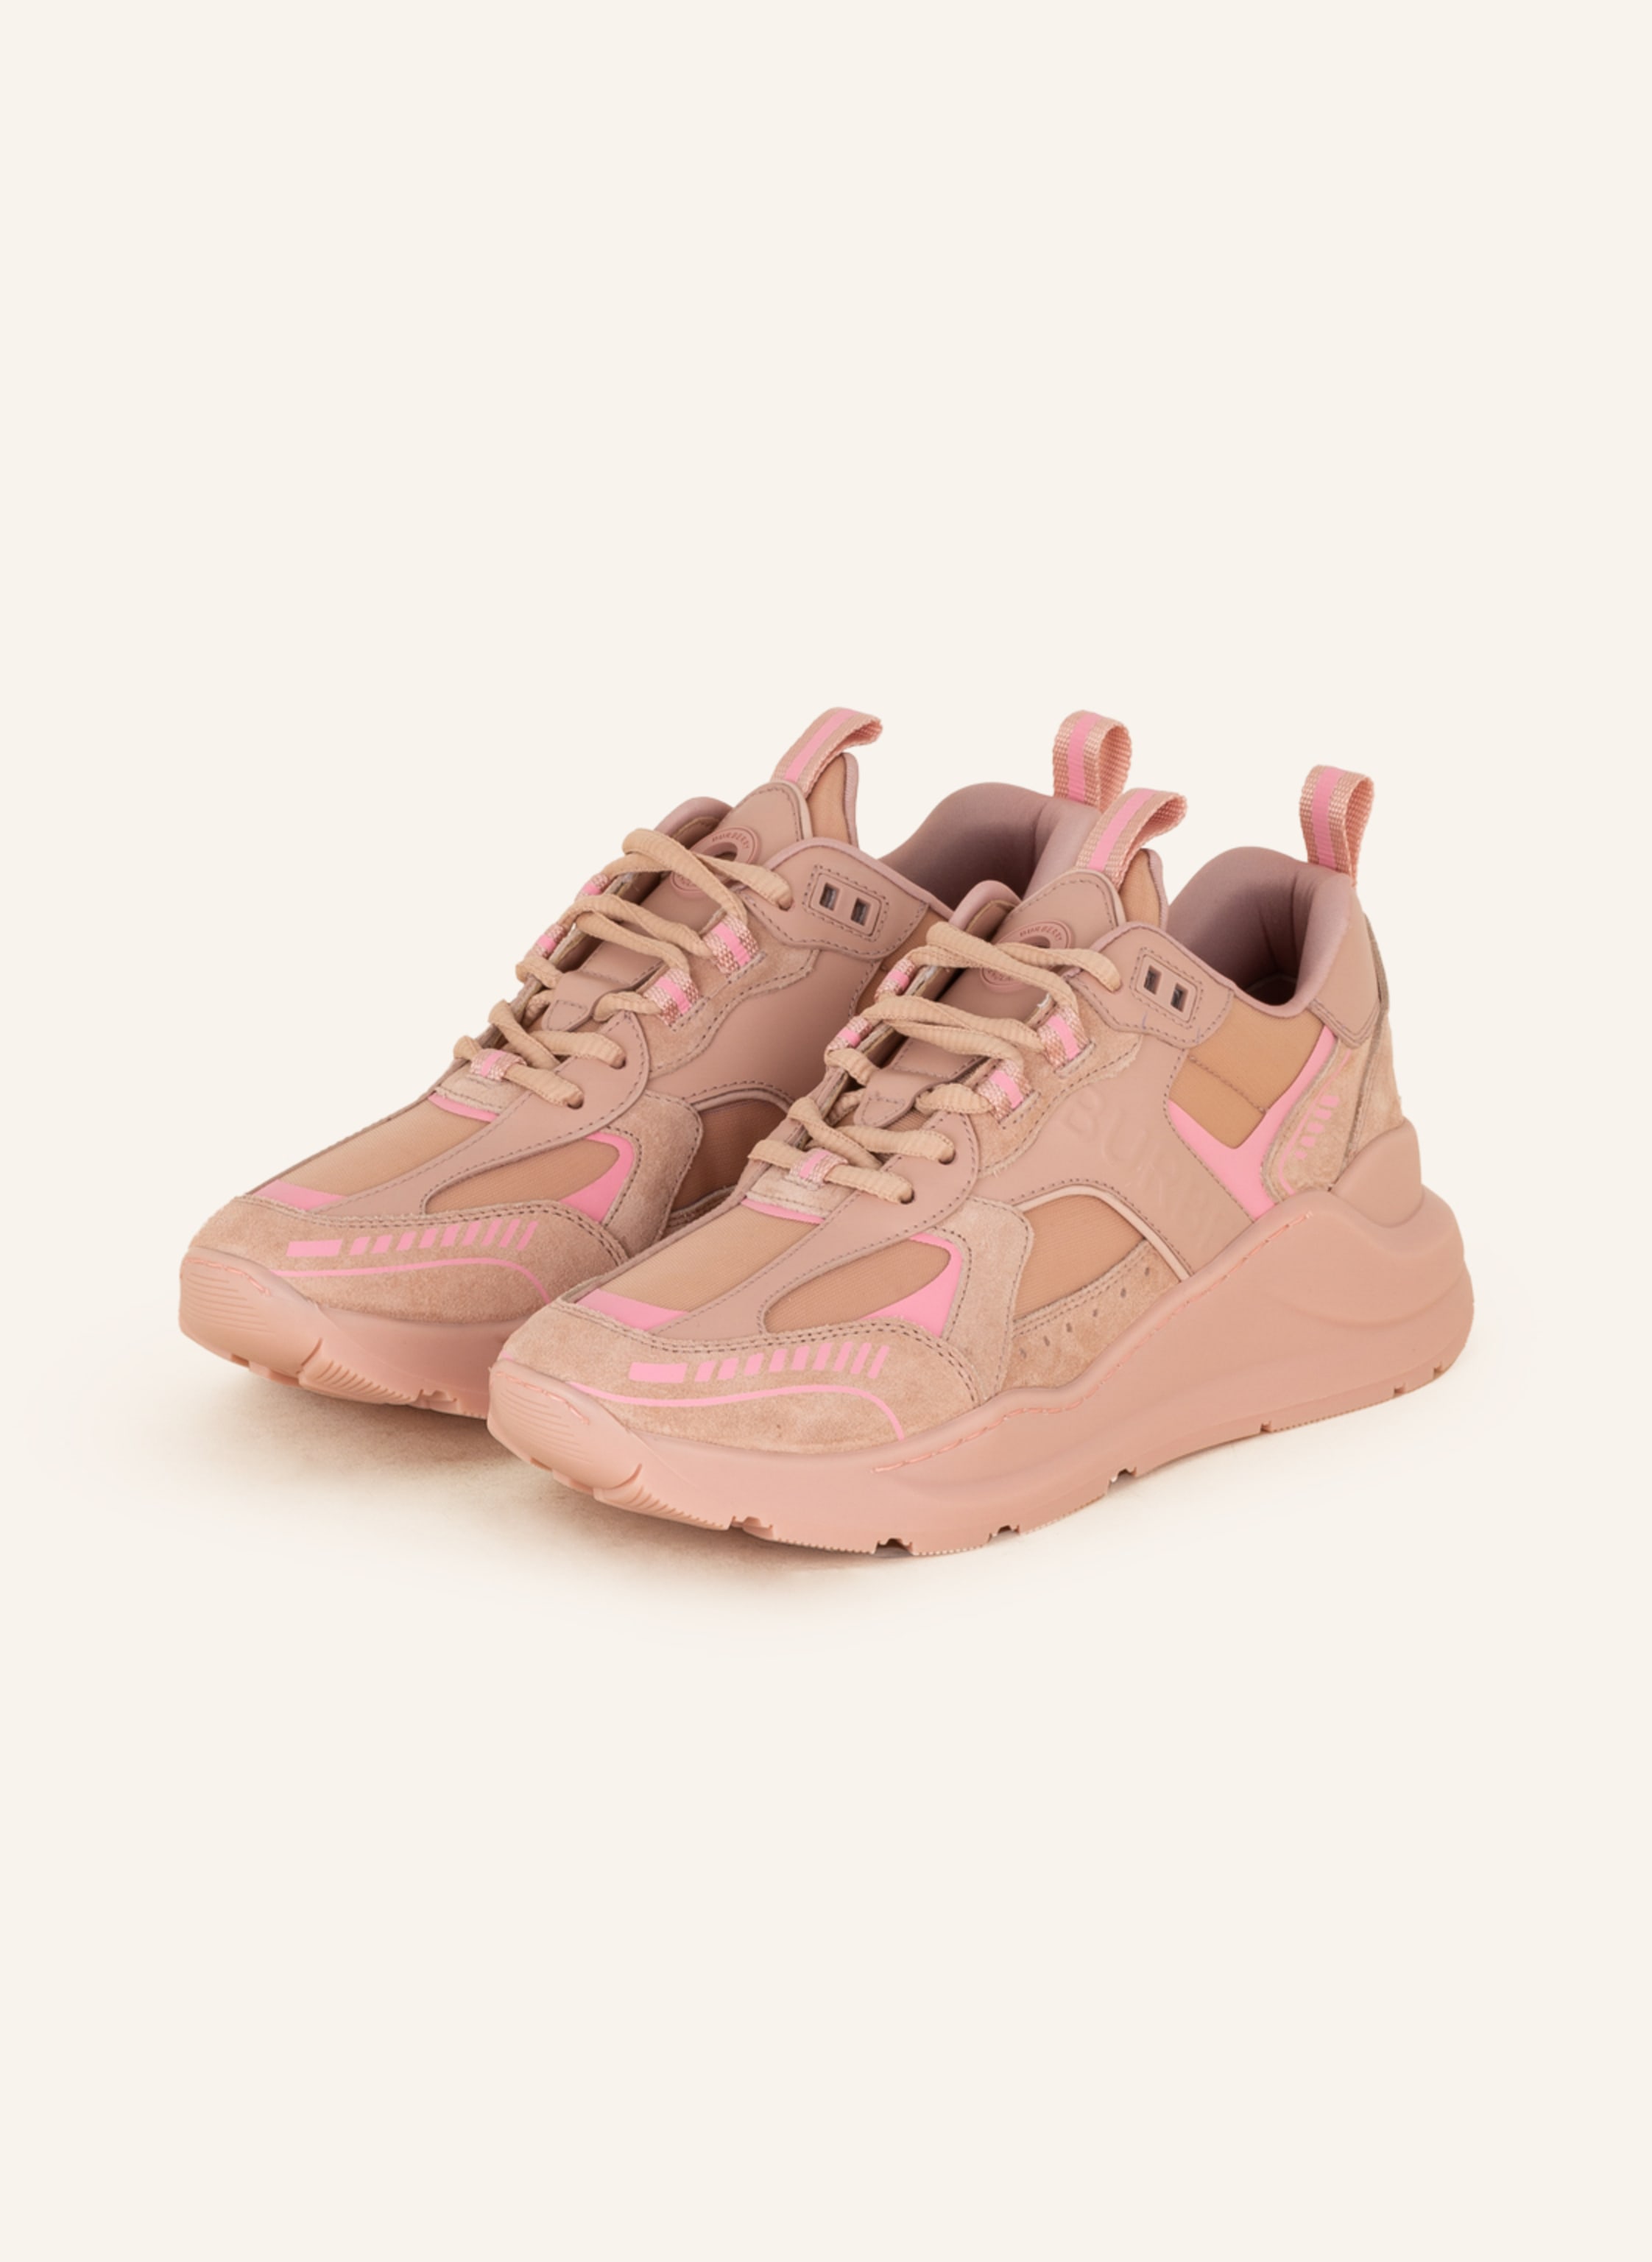 BURBERRY Sneakers SEAN in pink | Breuninger